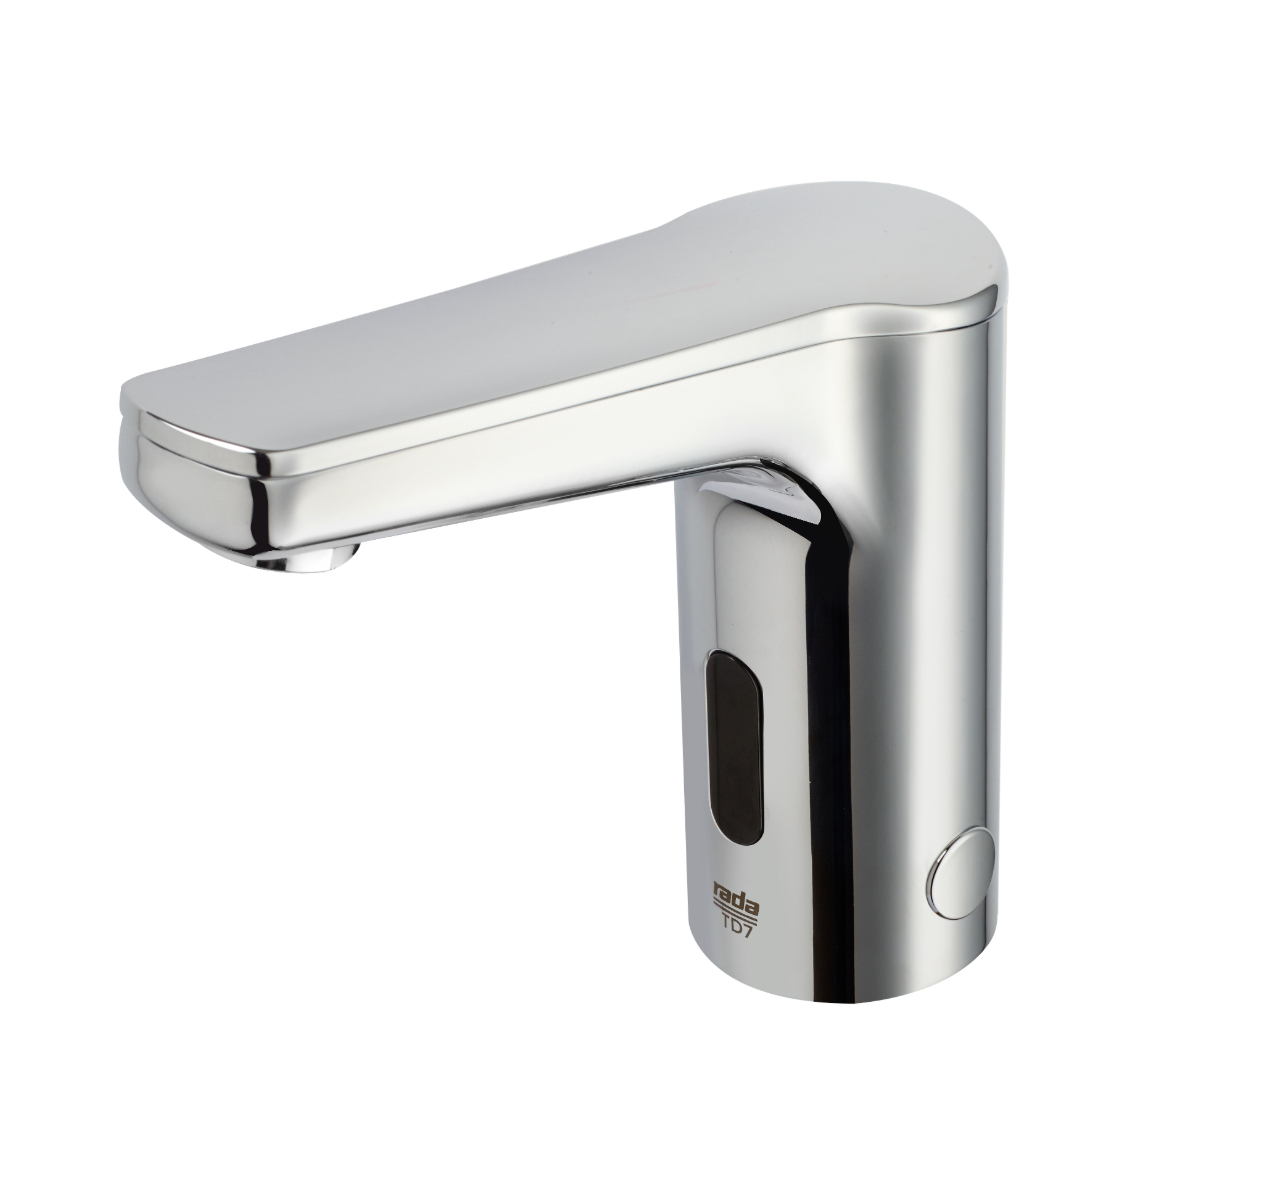 Product photo for Rada TD7 washbasin sensor tap